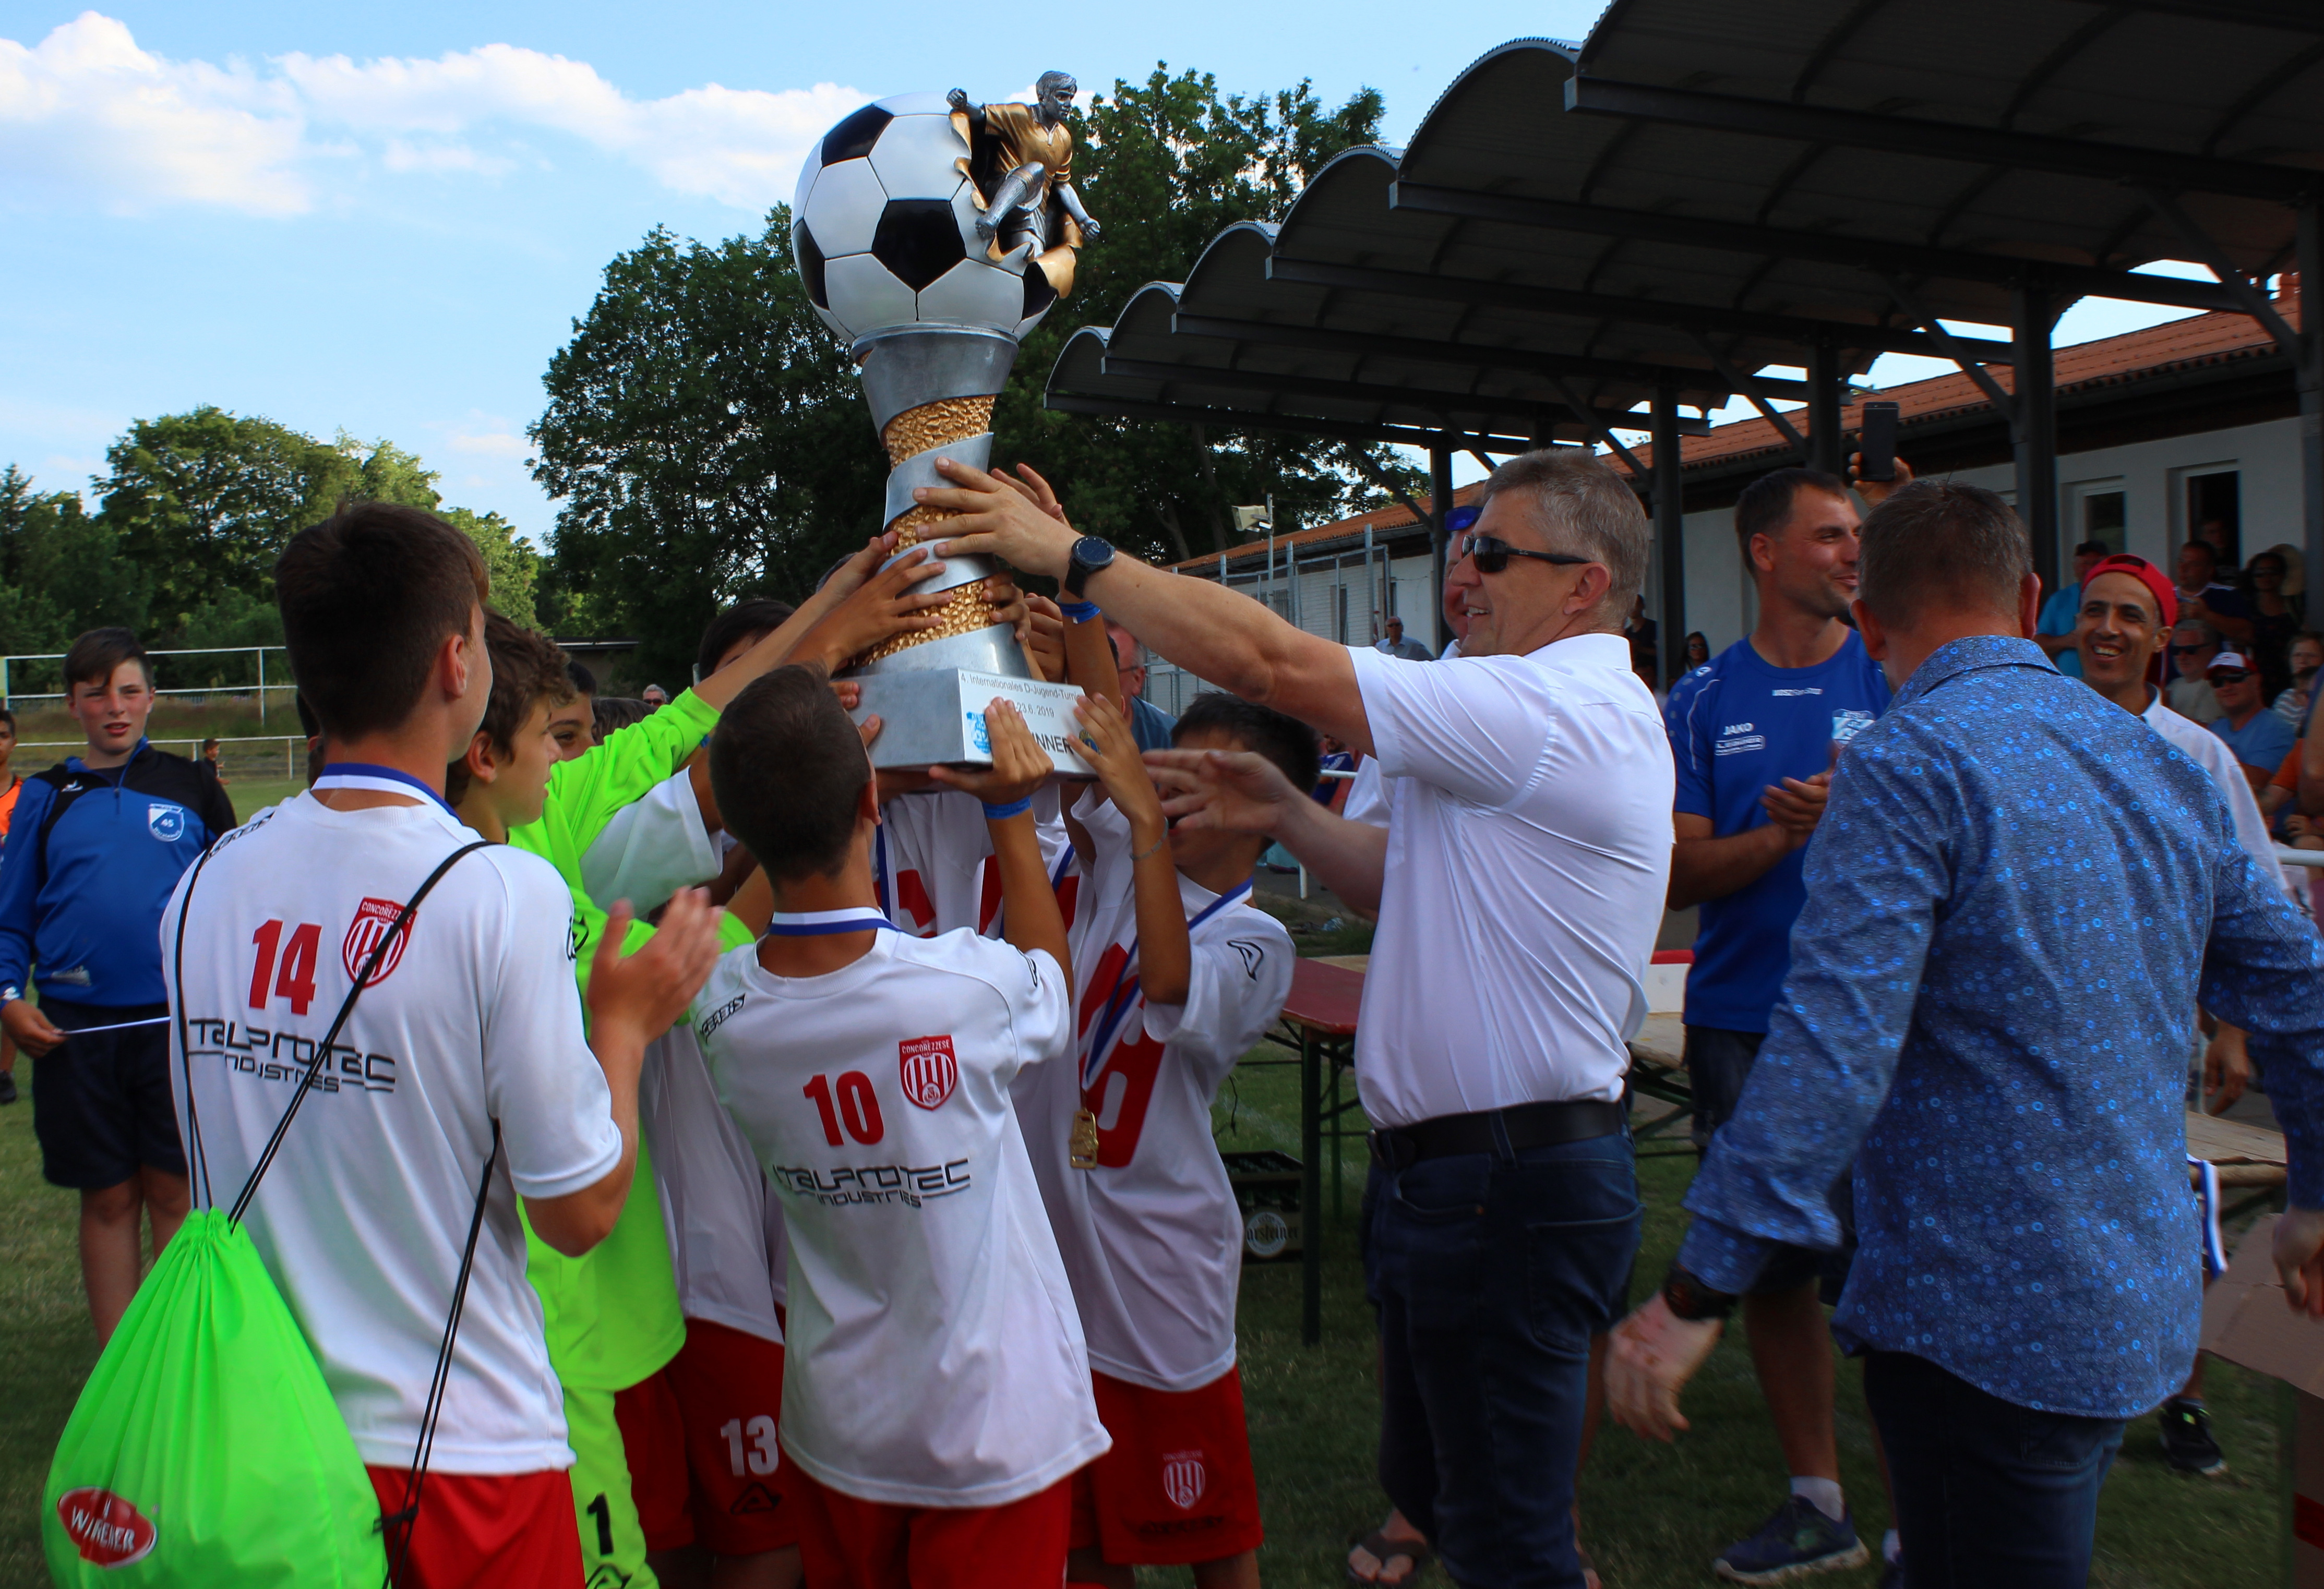 Siegerpokal im Jugendfußballturnier geht nach Italien